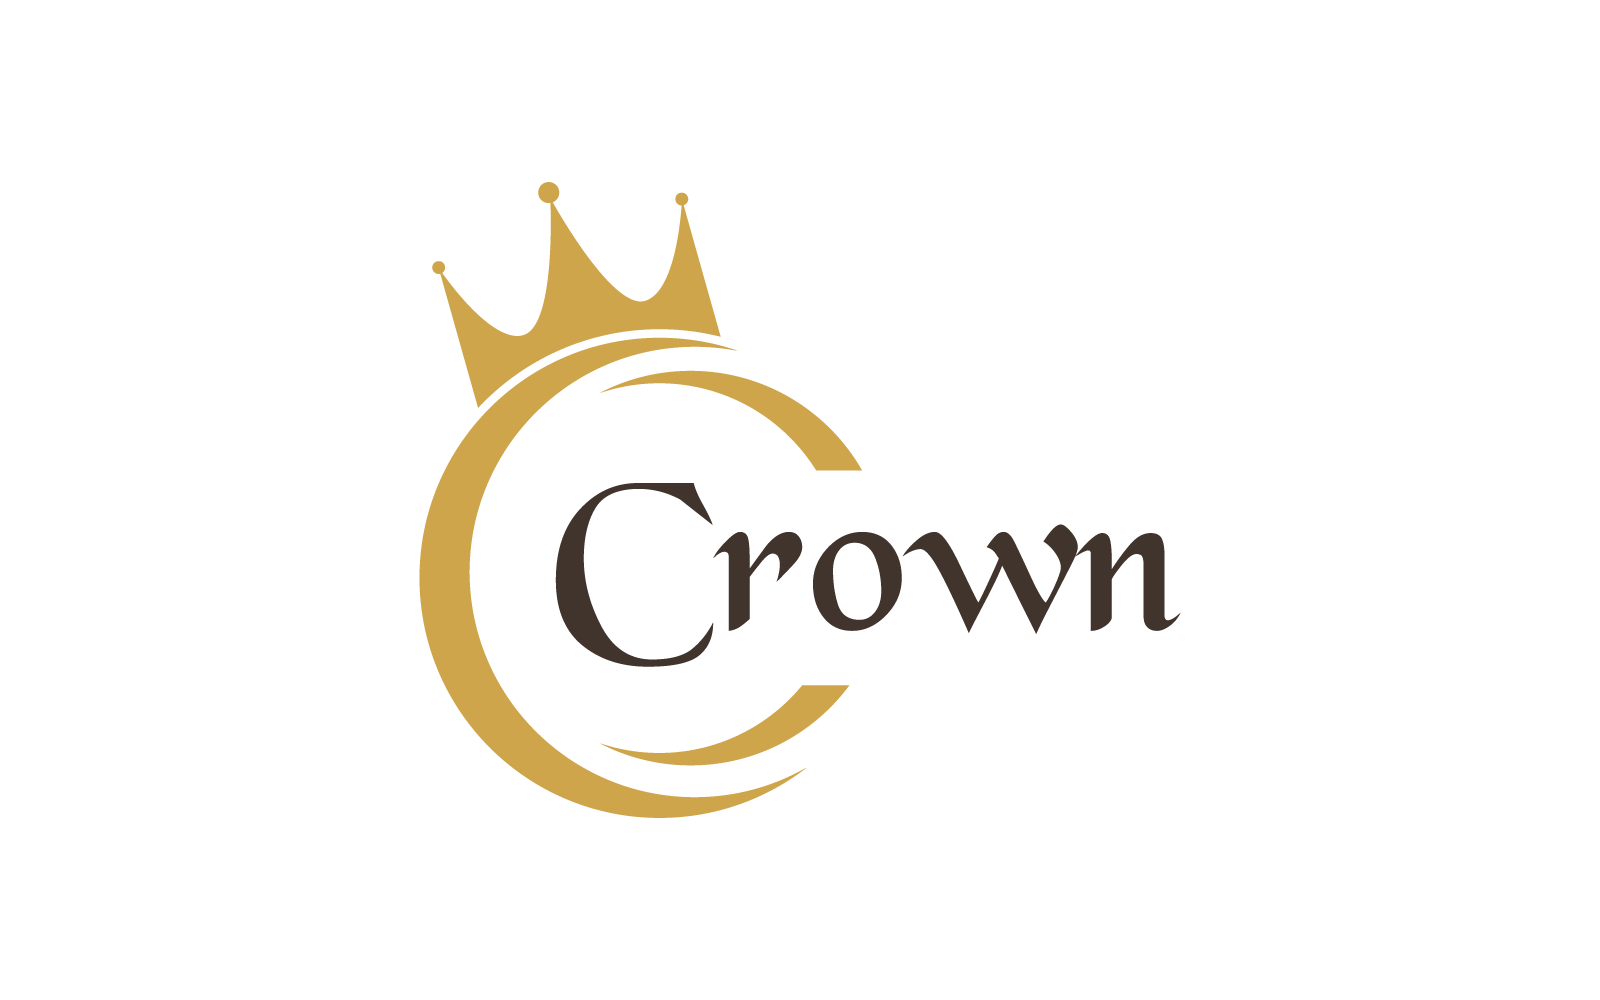 Crown illustration logo icon vector design